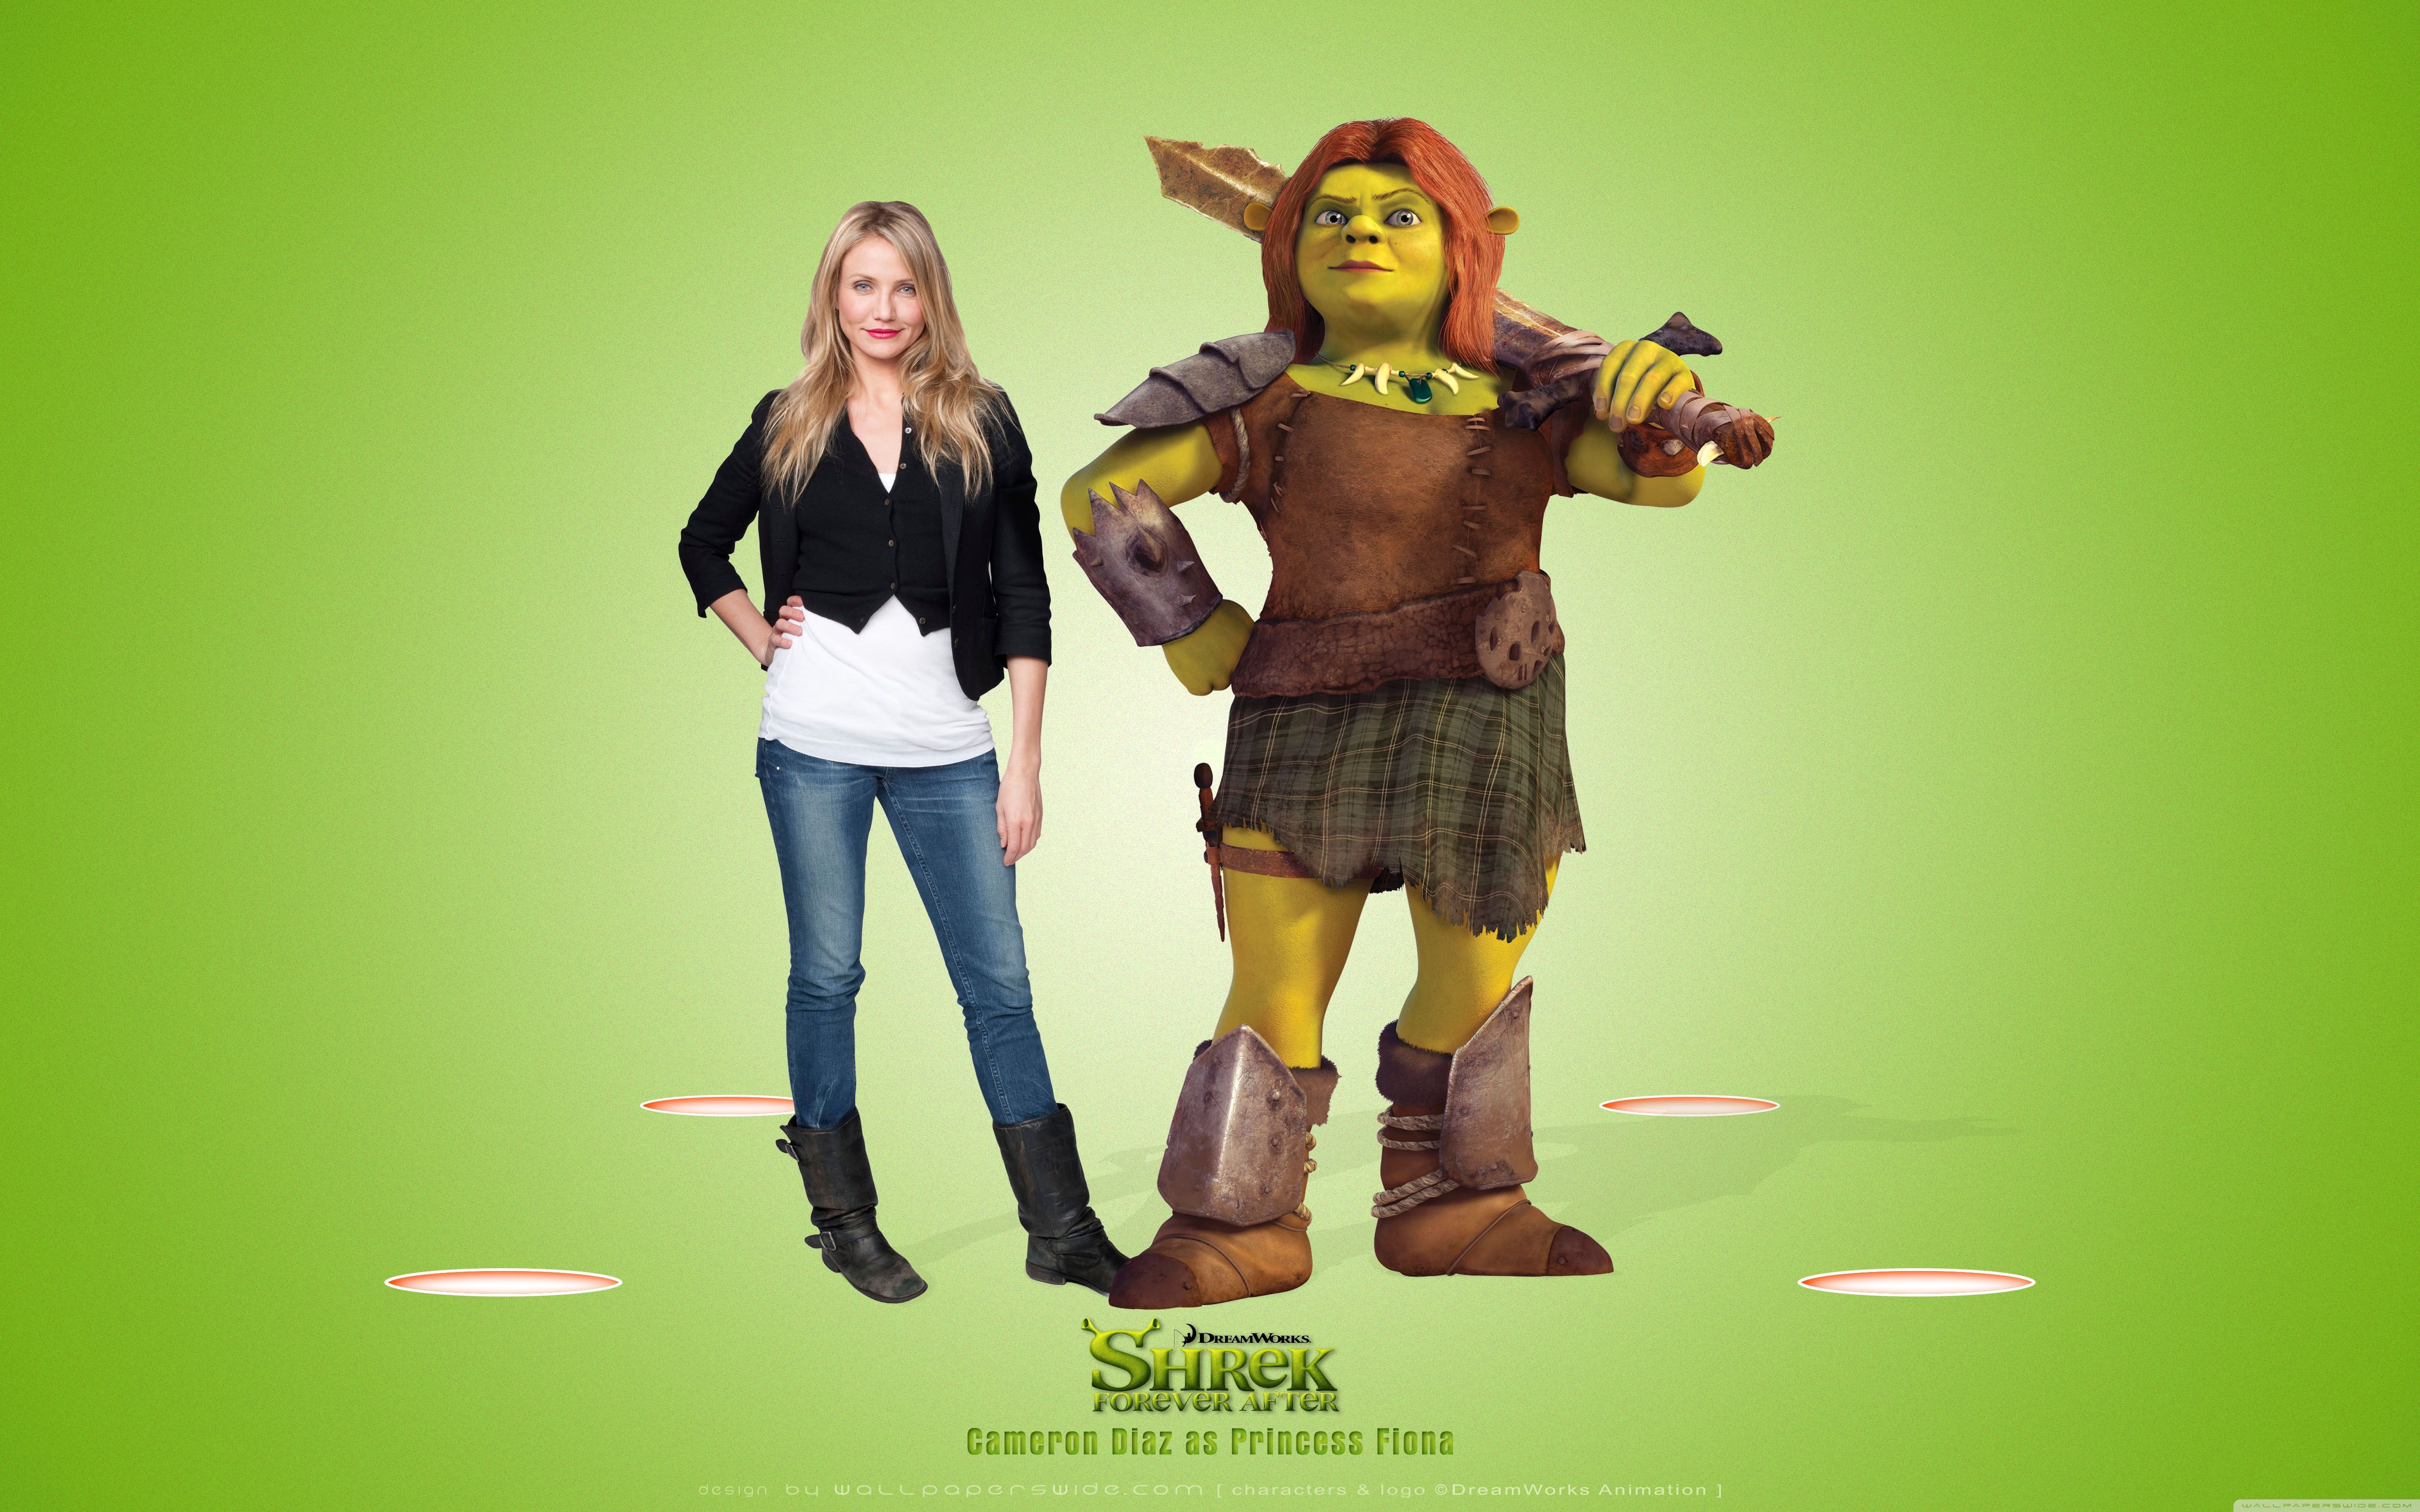 Cameron Diaz as Princess Fiona, Shrek Forever After Ultra HD Desktop Background Wallpaper for 4K UHD TV, Widescreen & UltraWide Desktop & Laptop, Tablet